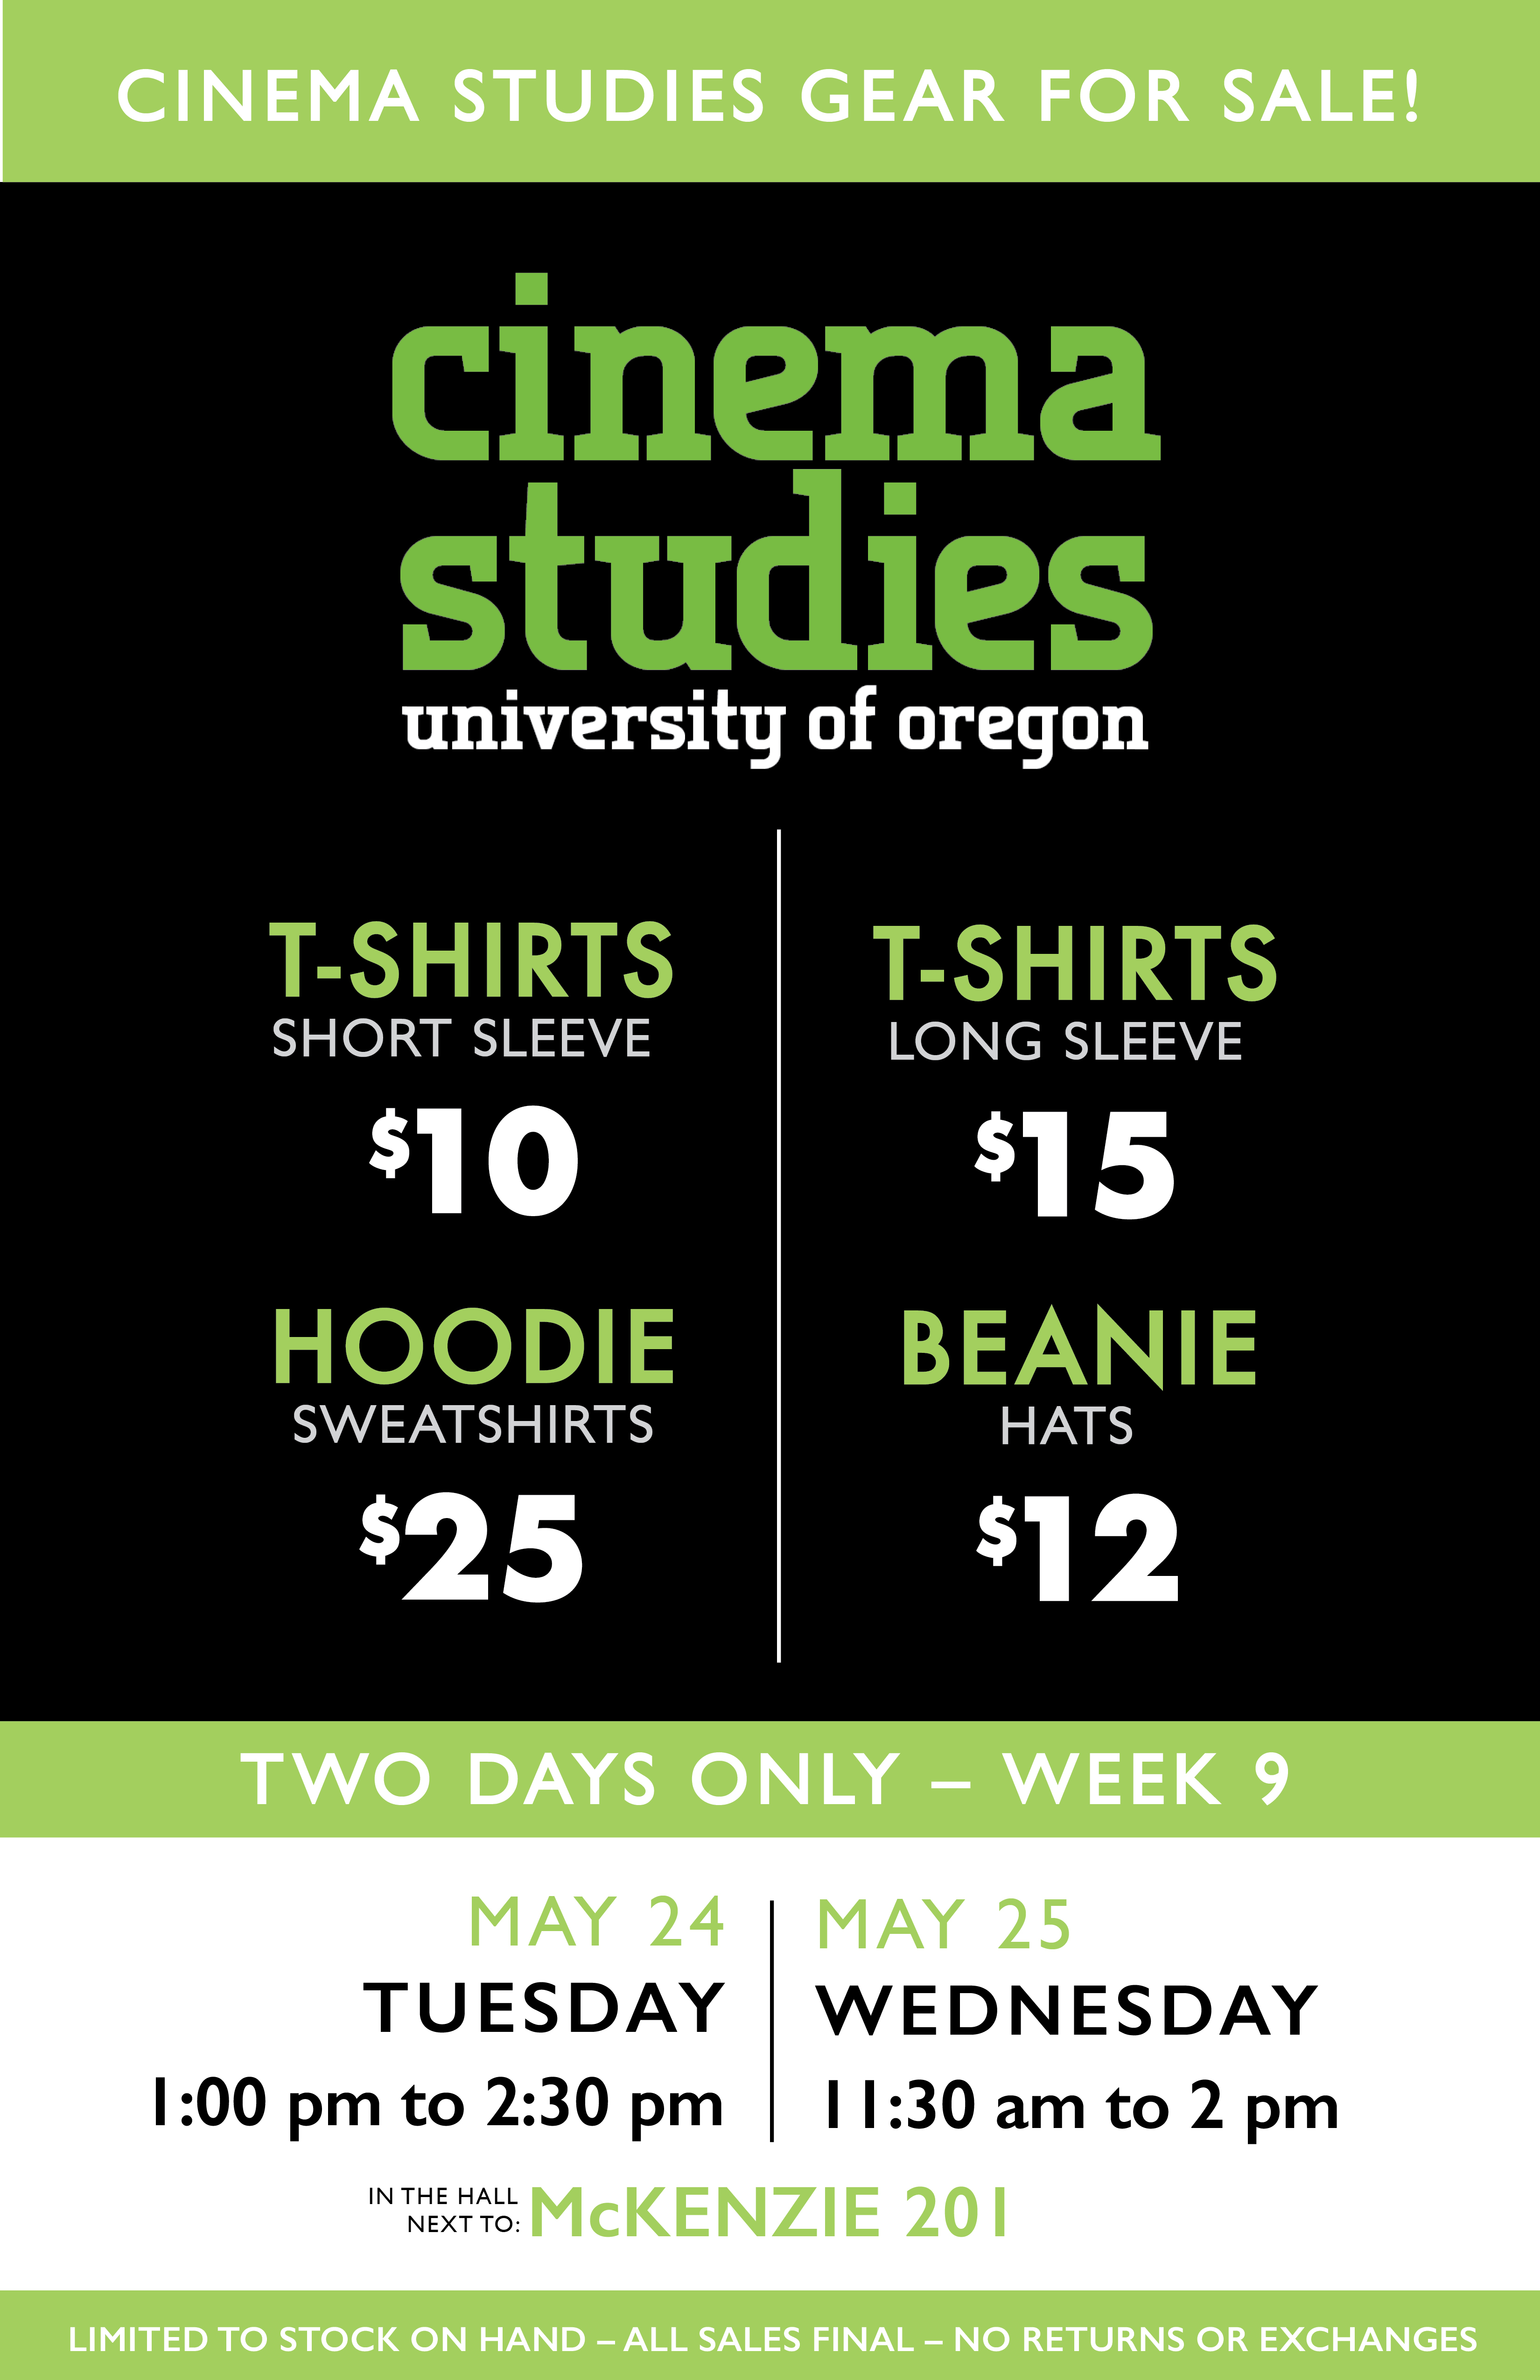 Cinema Studies logo hoodie sweatshirts, tshirts, and beanies for sale